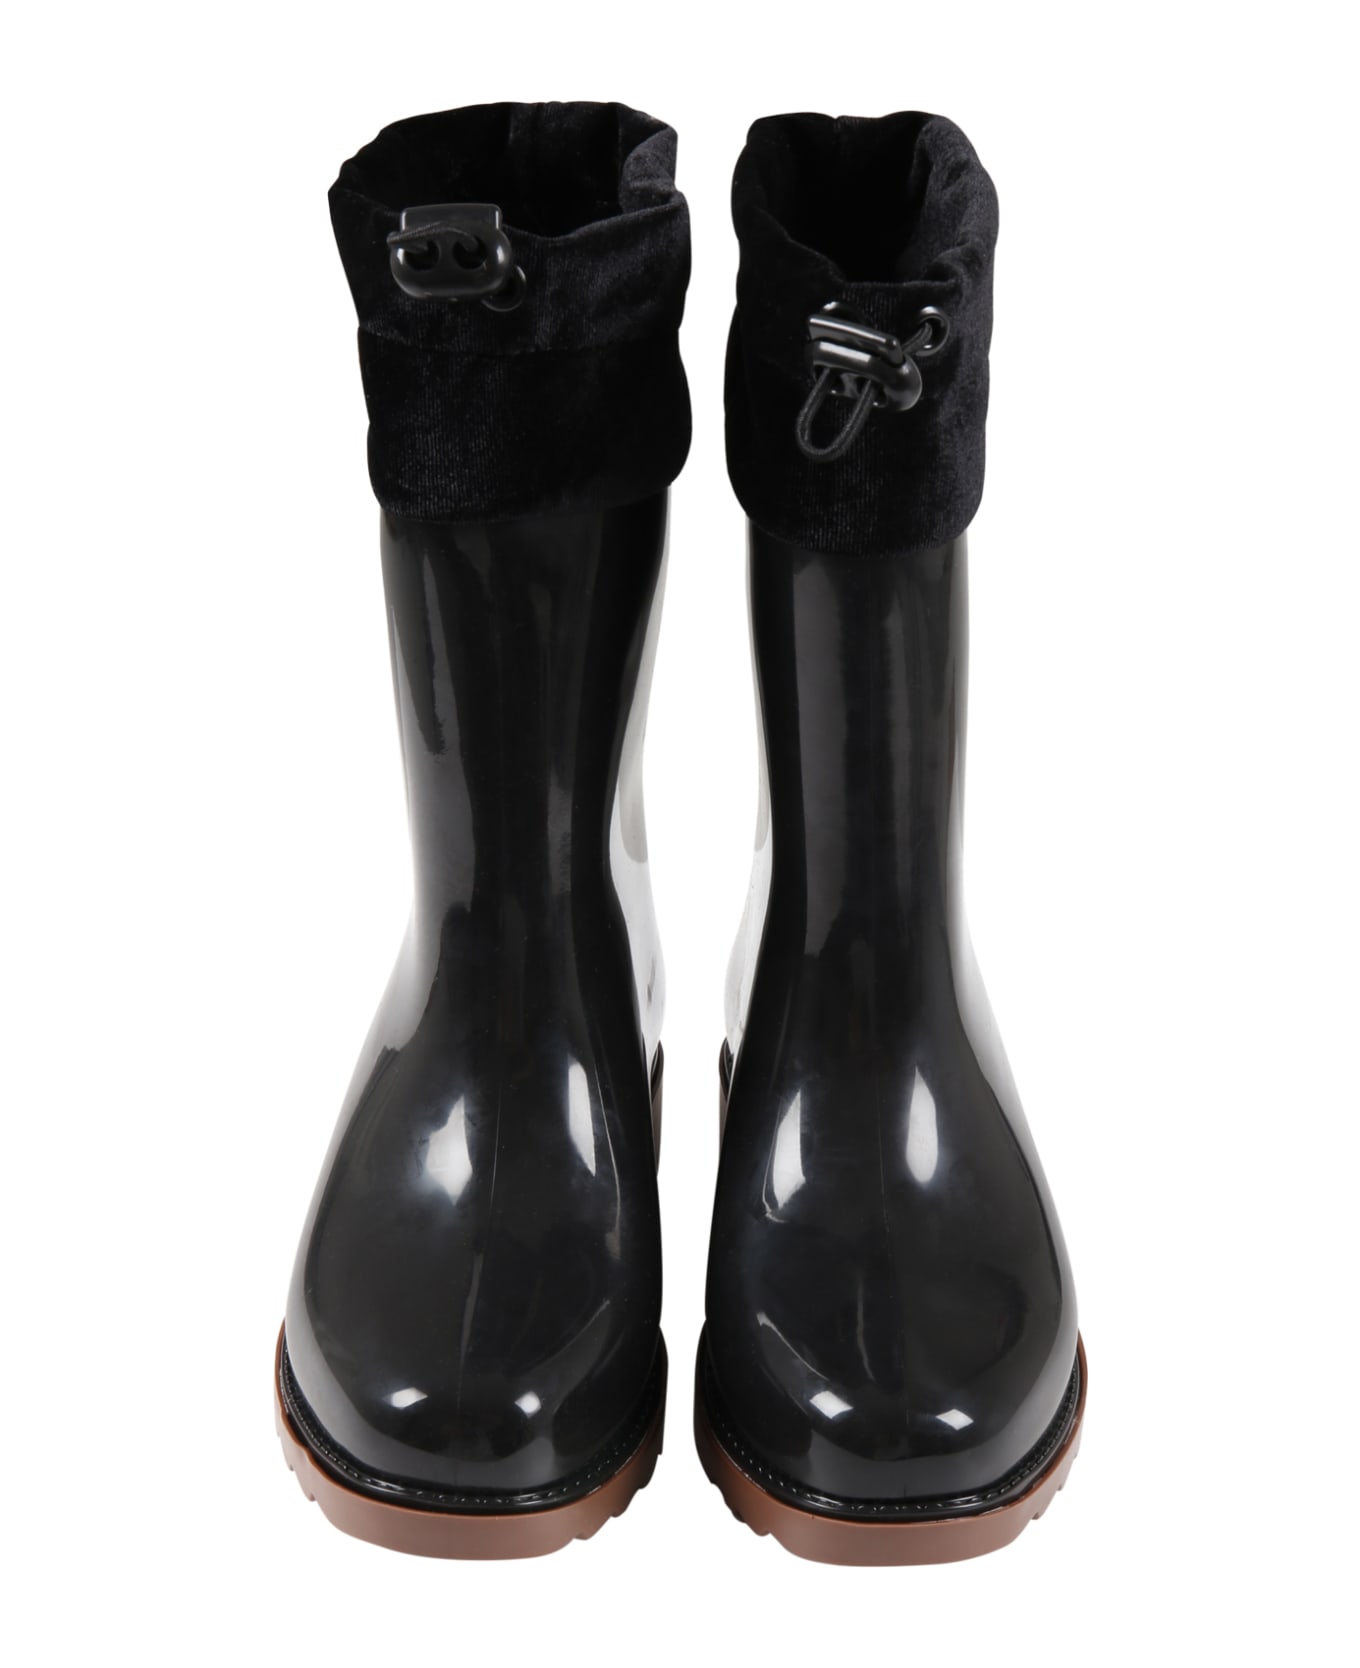 Melissa Black Boots For Girl - Black